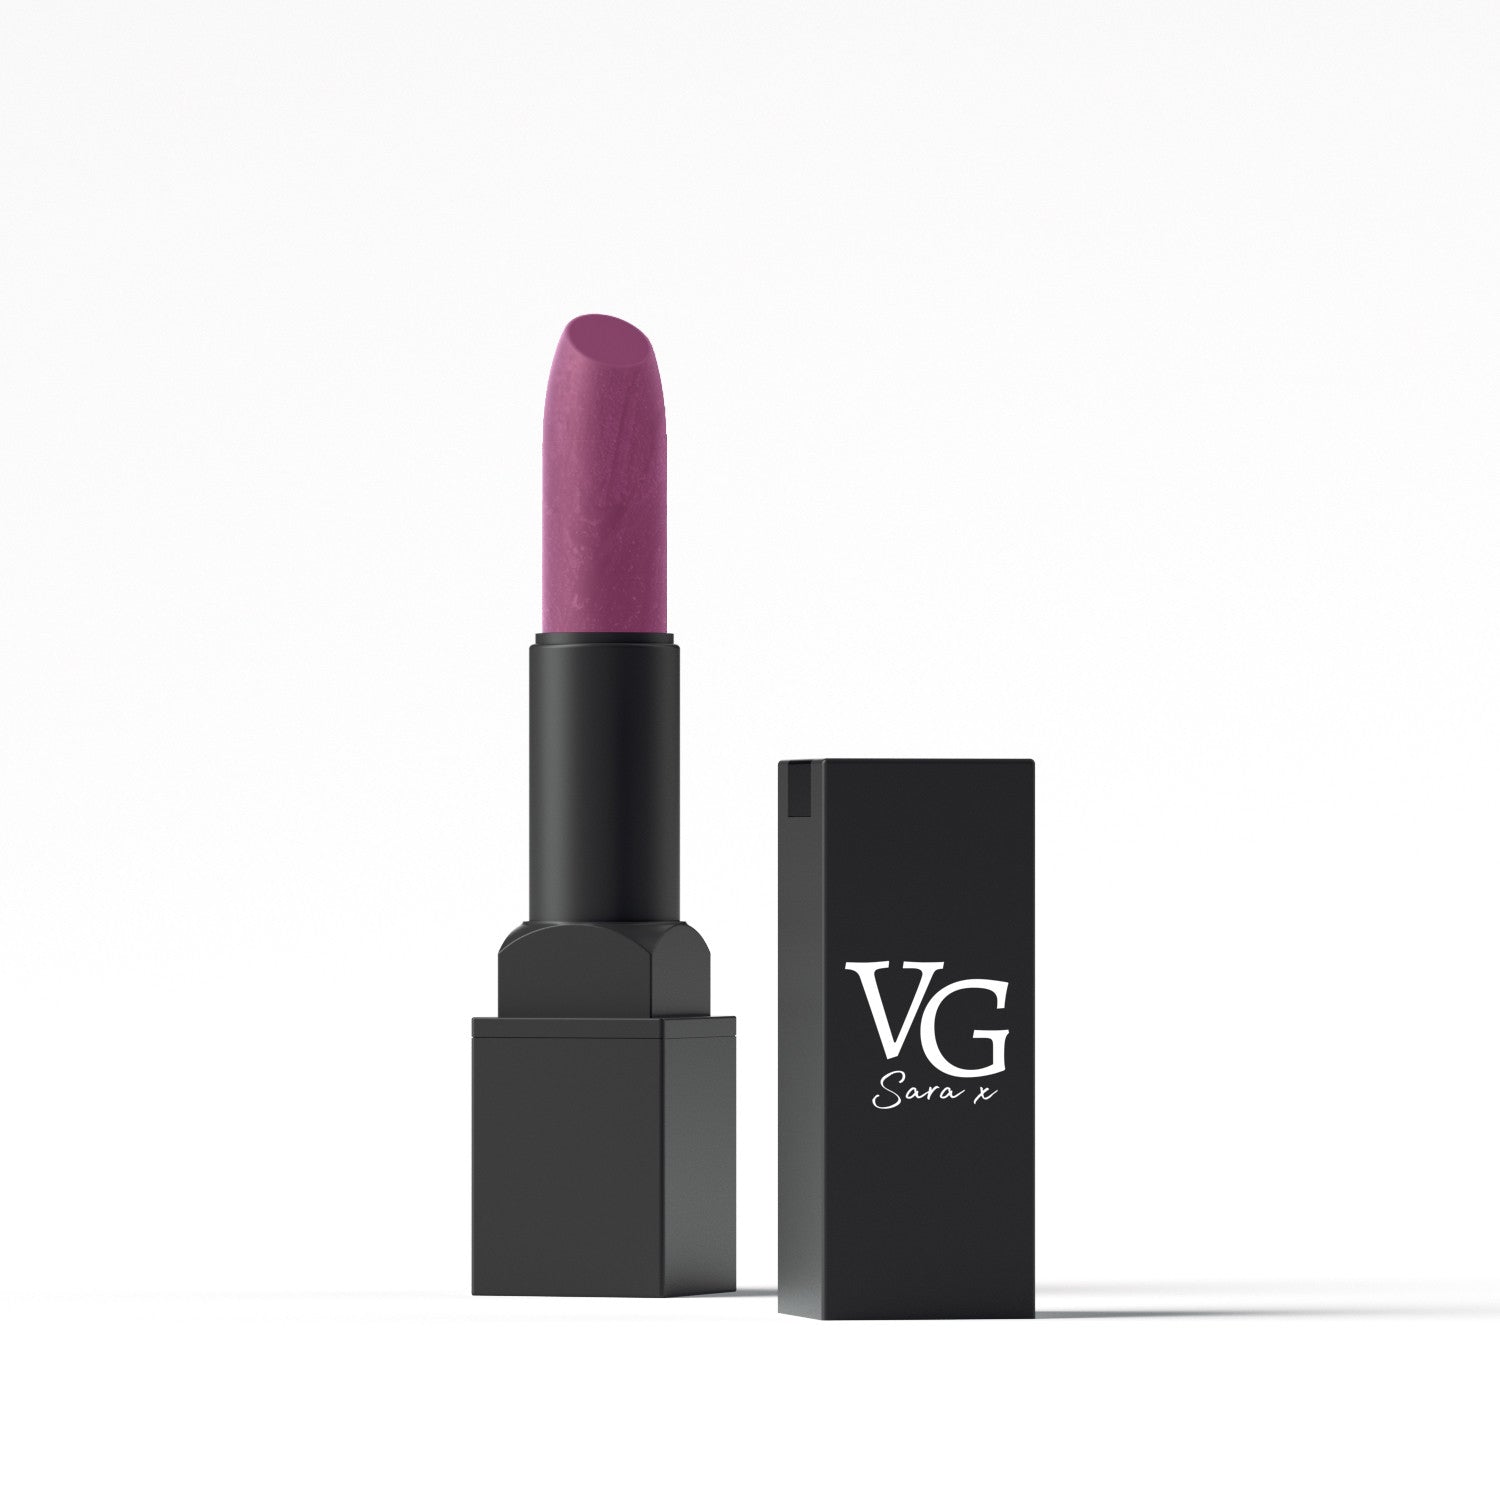 VG Cosmetics purple lipstick displayed with its black case